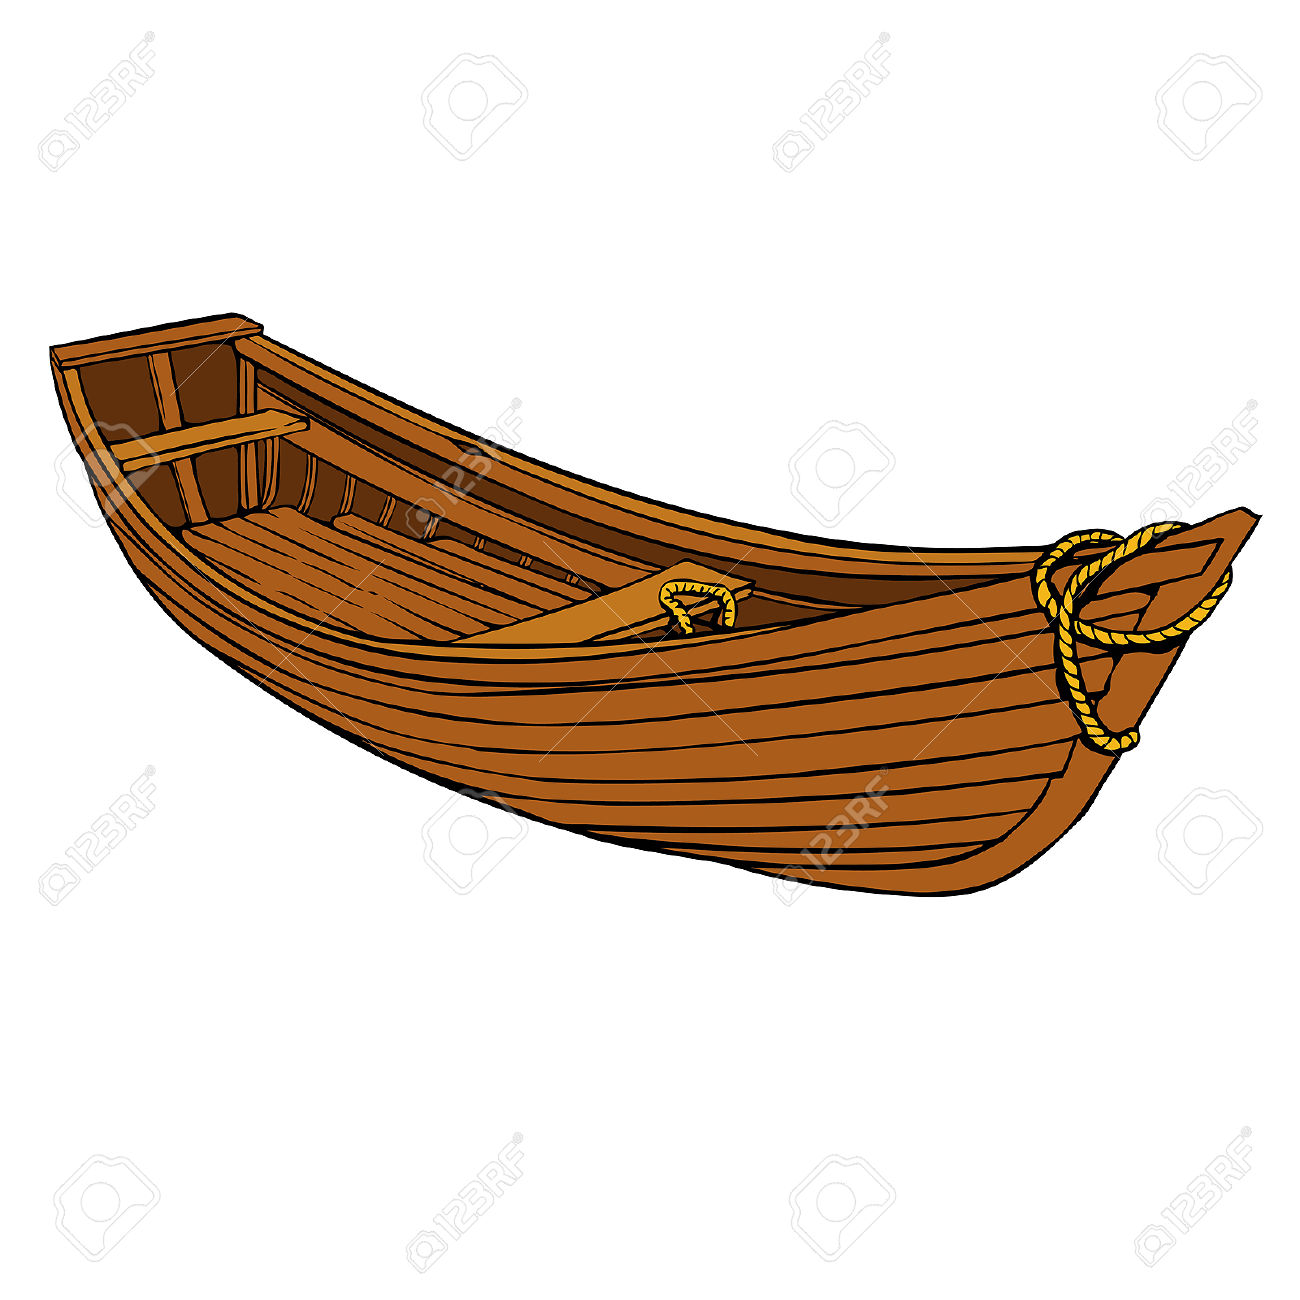 clip art wooden boat - photo #4